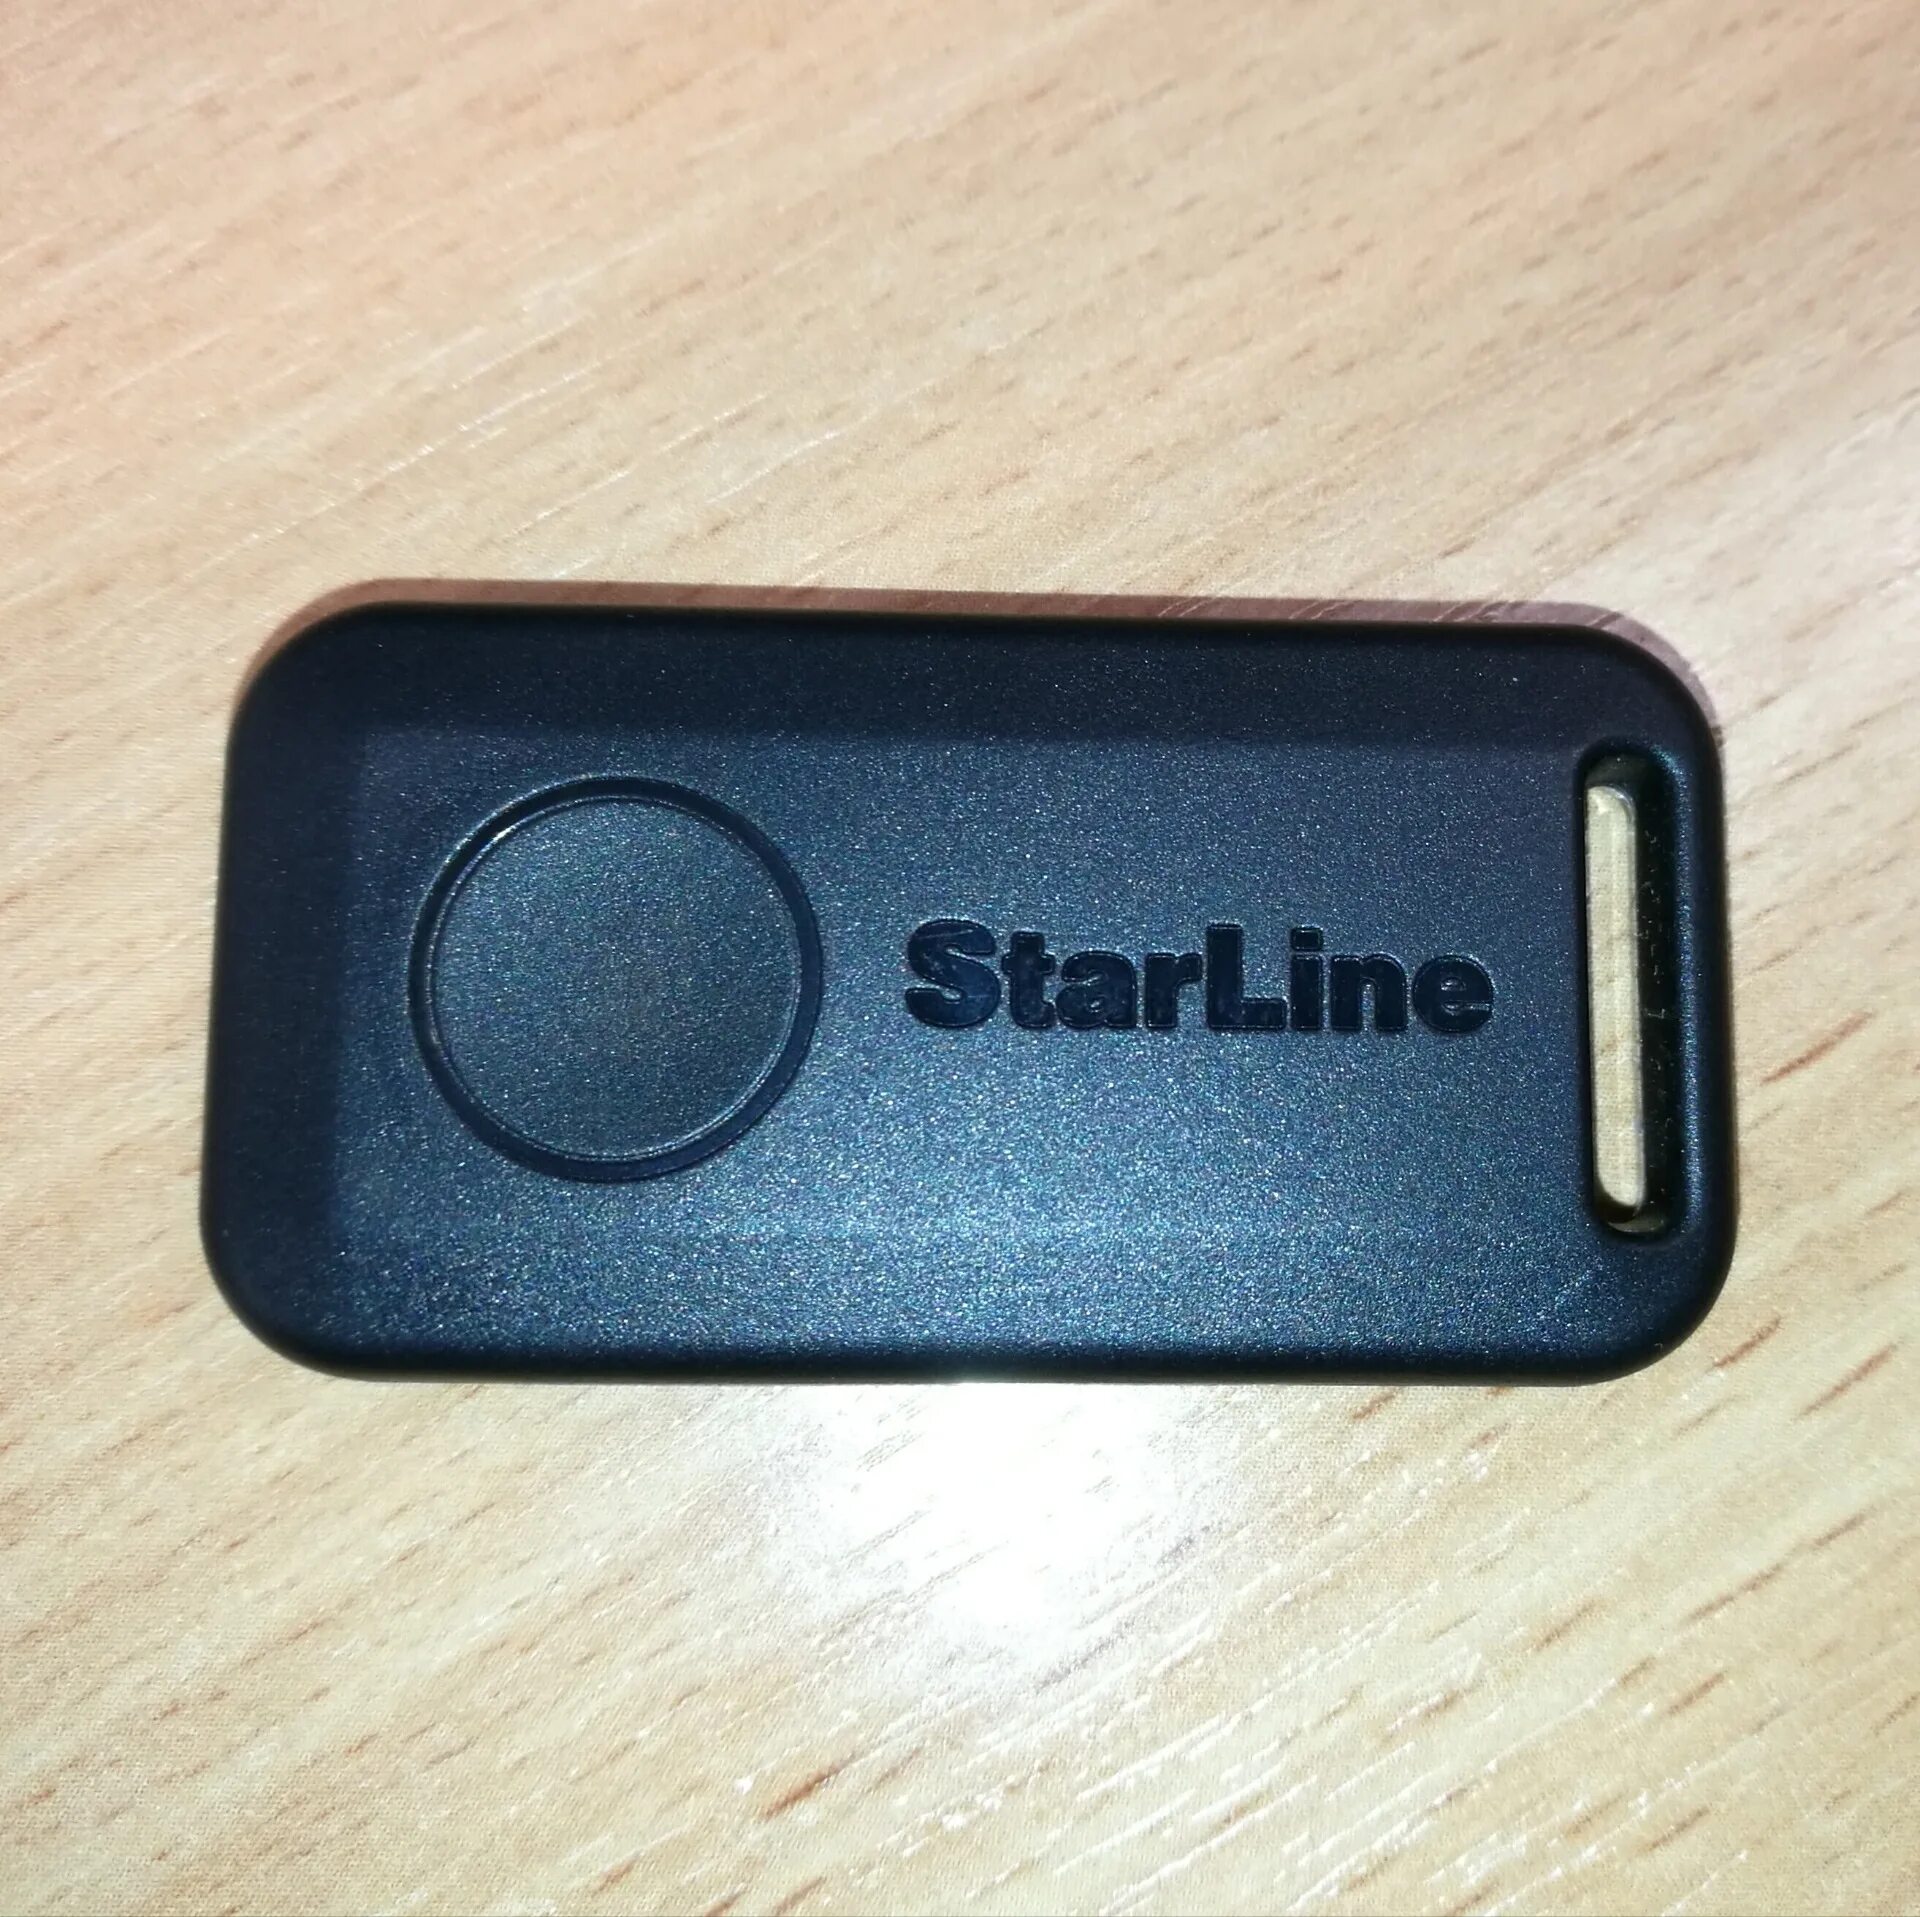 Метка STARLINE s96. Старлайн s96. Сигнализация STARLINE s96 v2. STARLINE a96 v2 брелок. Метка старлайн купить